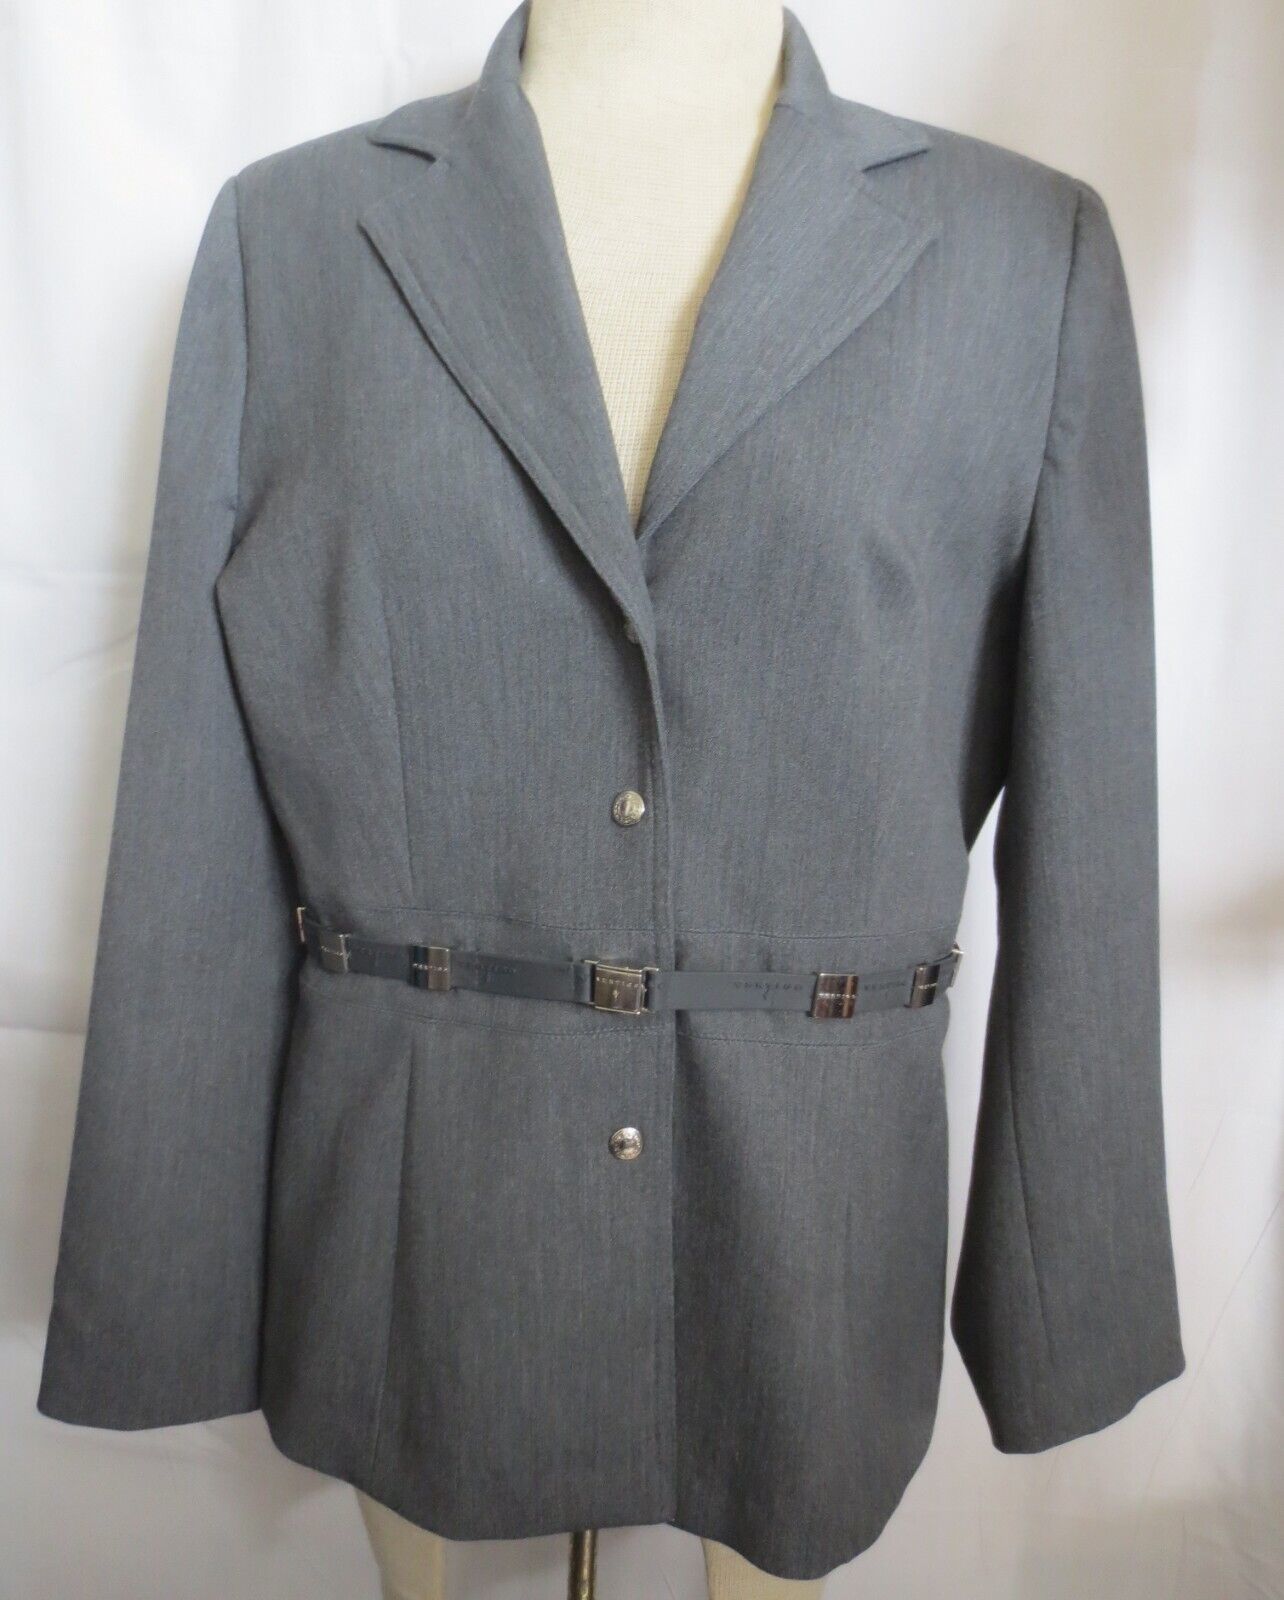 Primary image for Vertigo Paris  Gray Blazer Suit Jacket Size L Belted  Made in France